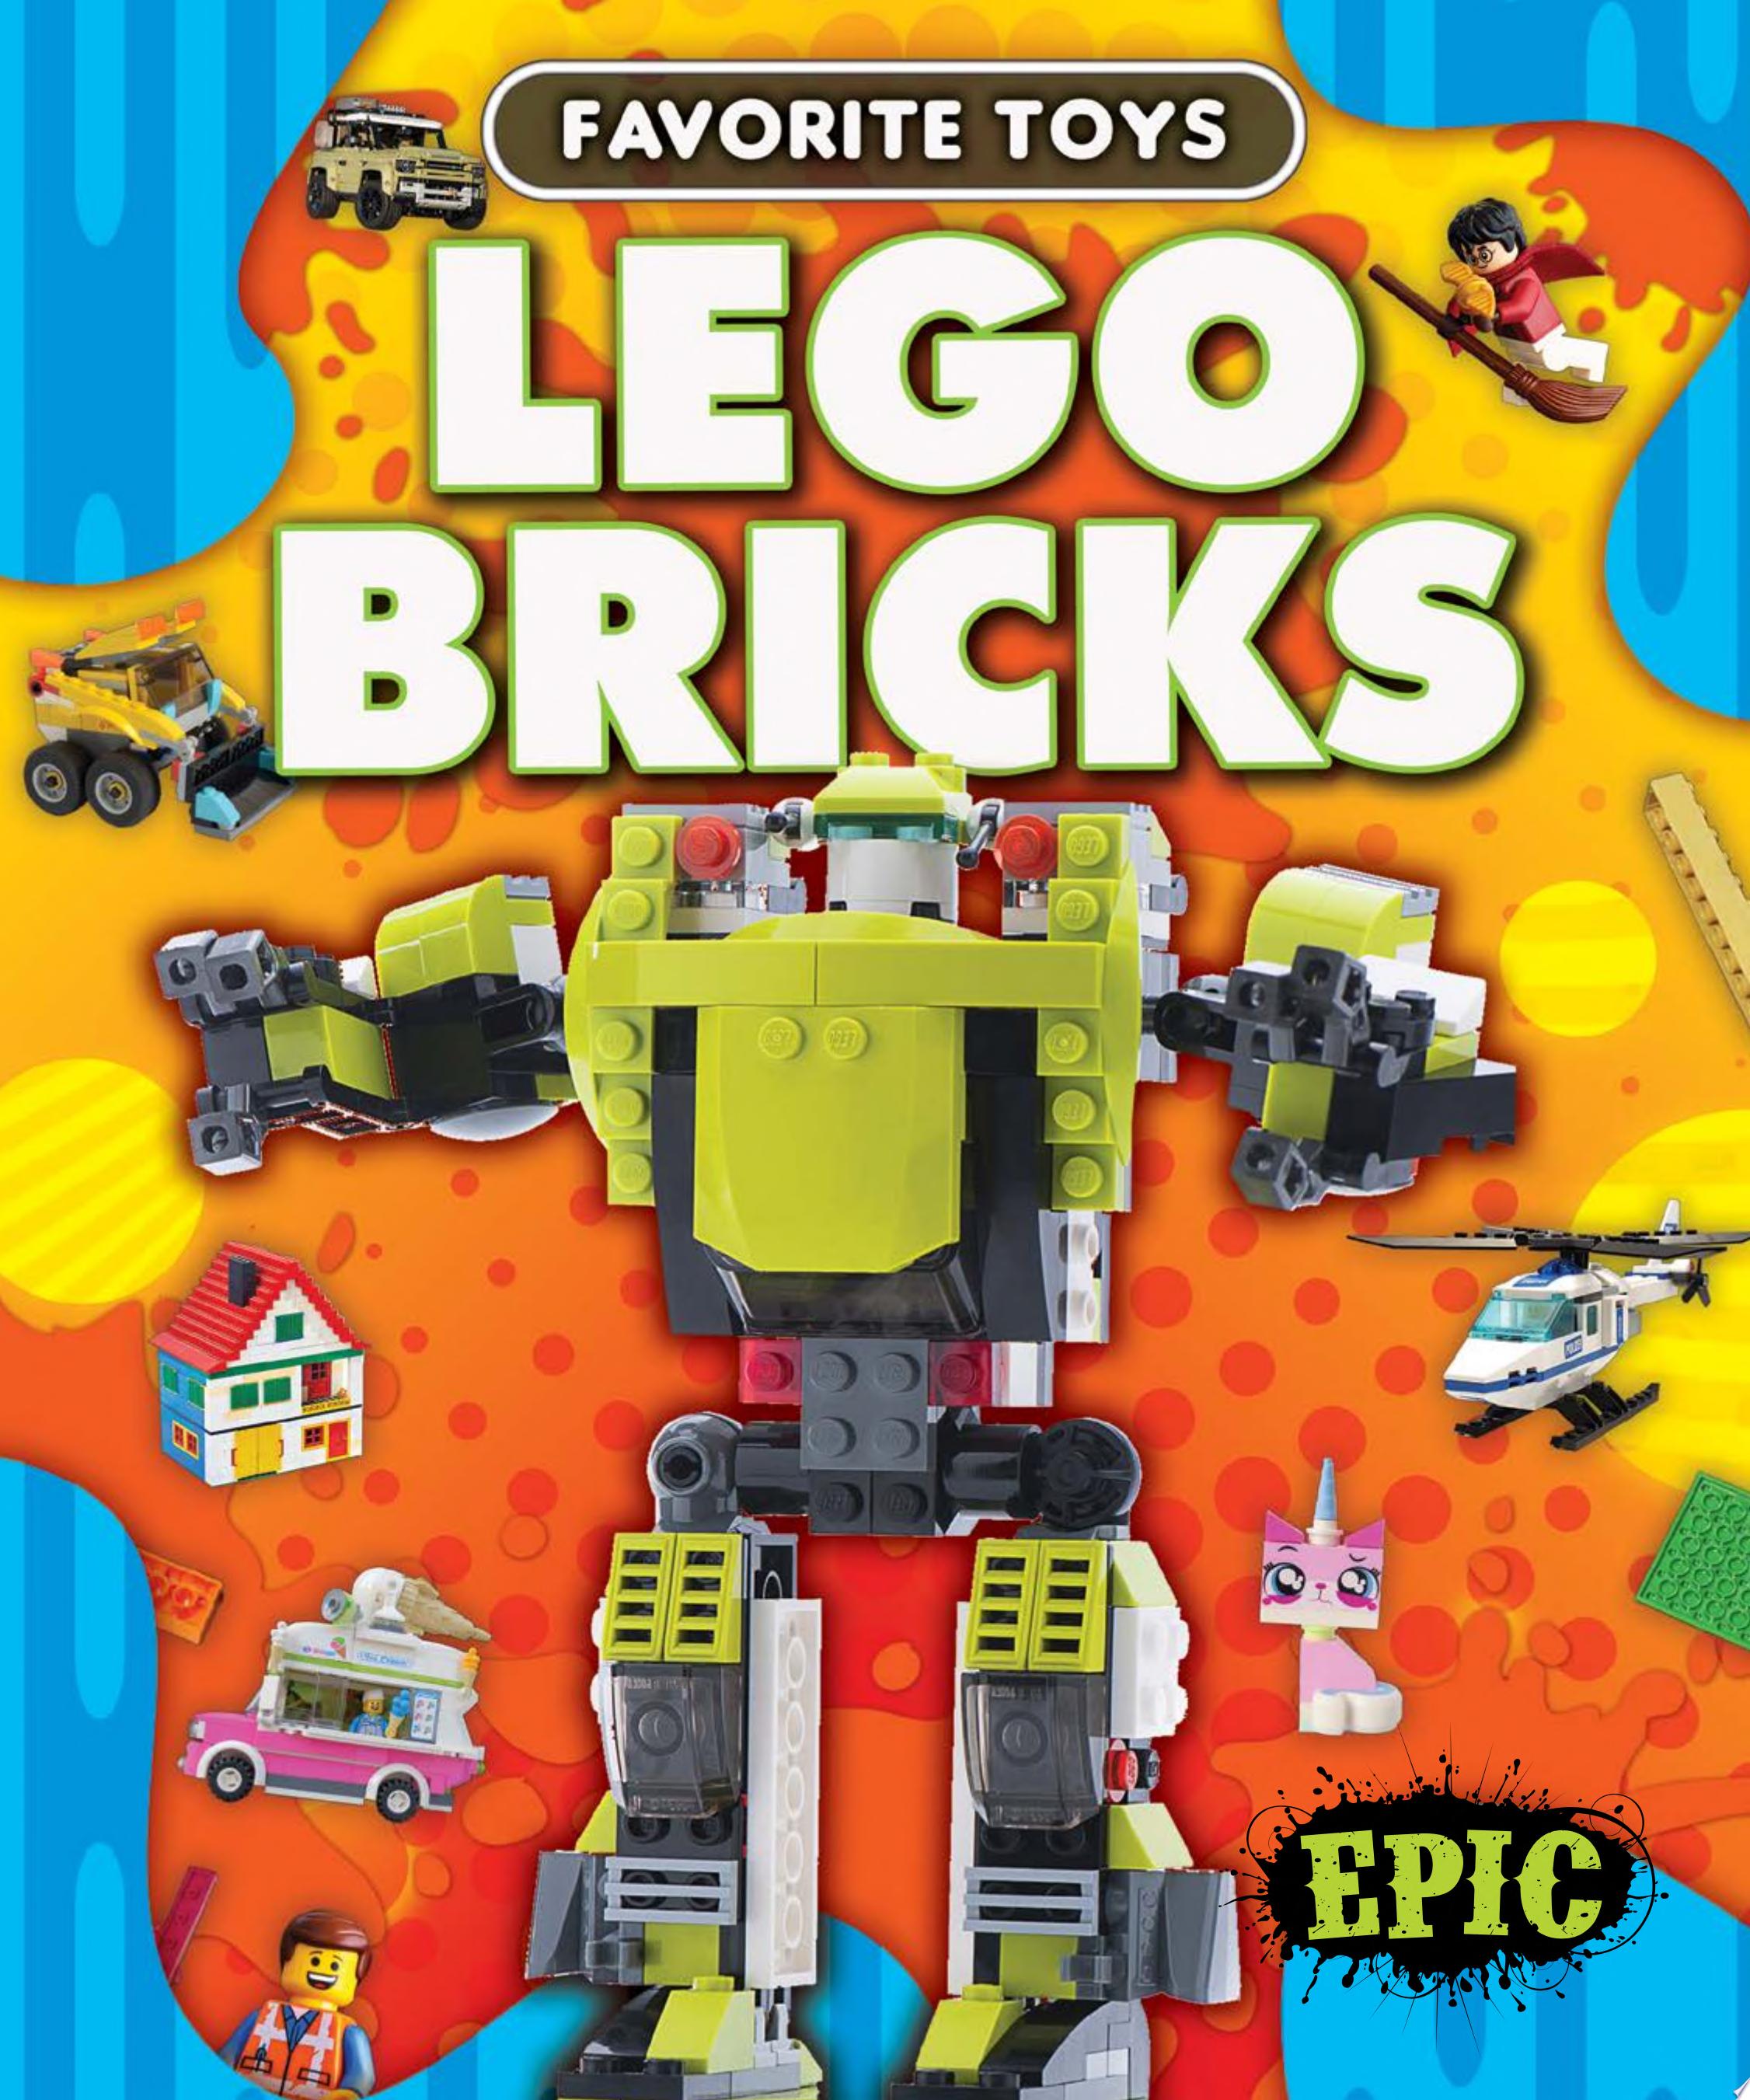 Image for "LEGO Bricks"